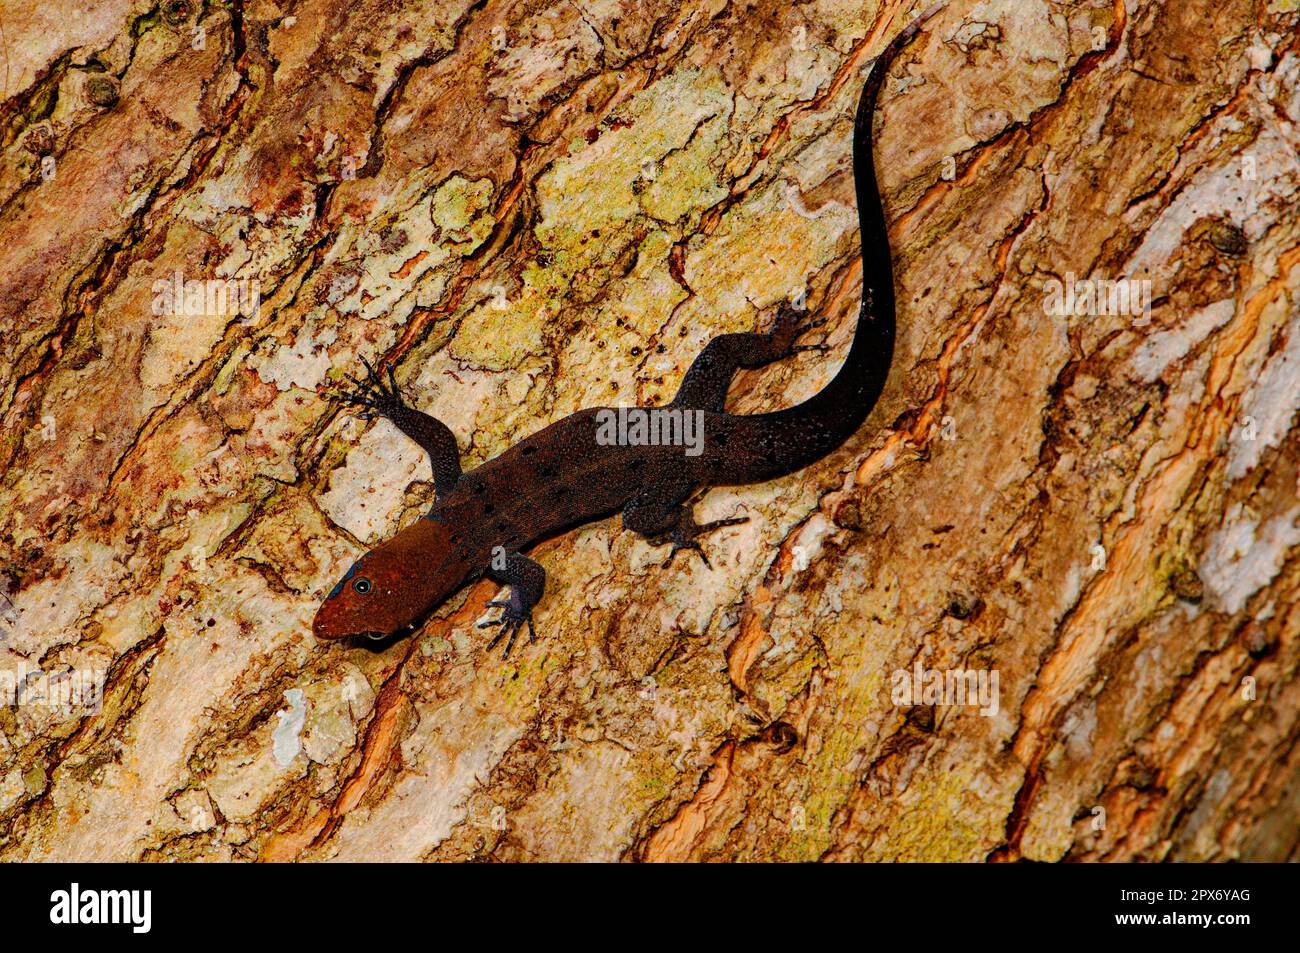 Yellow-headed gecko Stock Photo